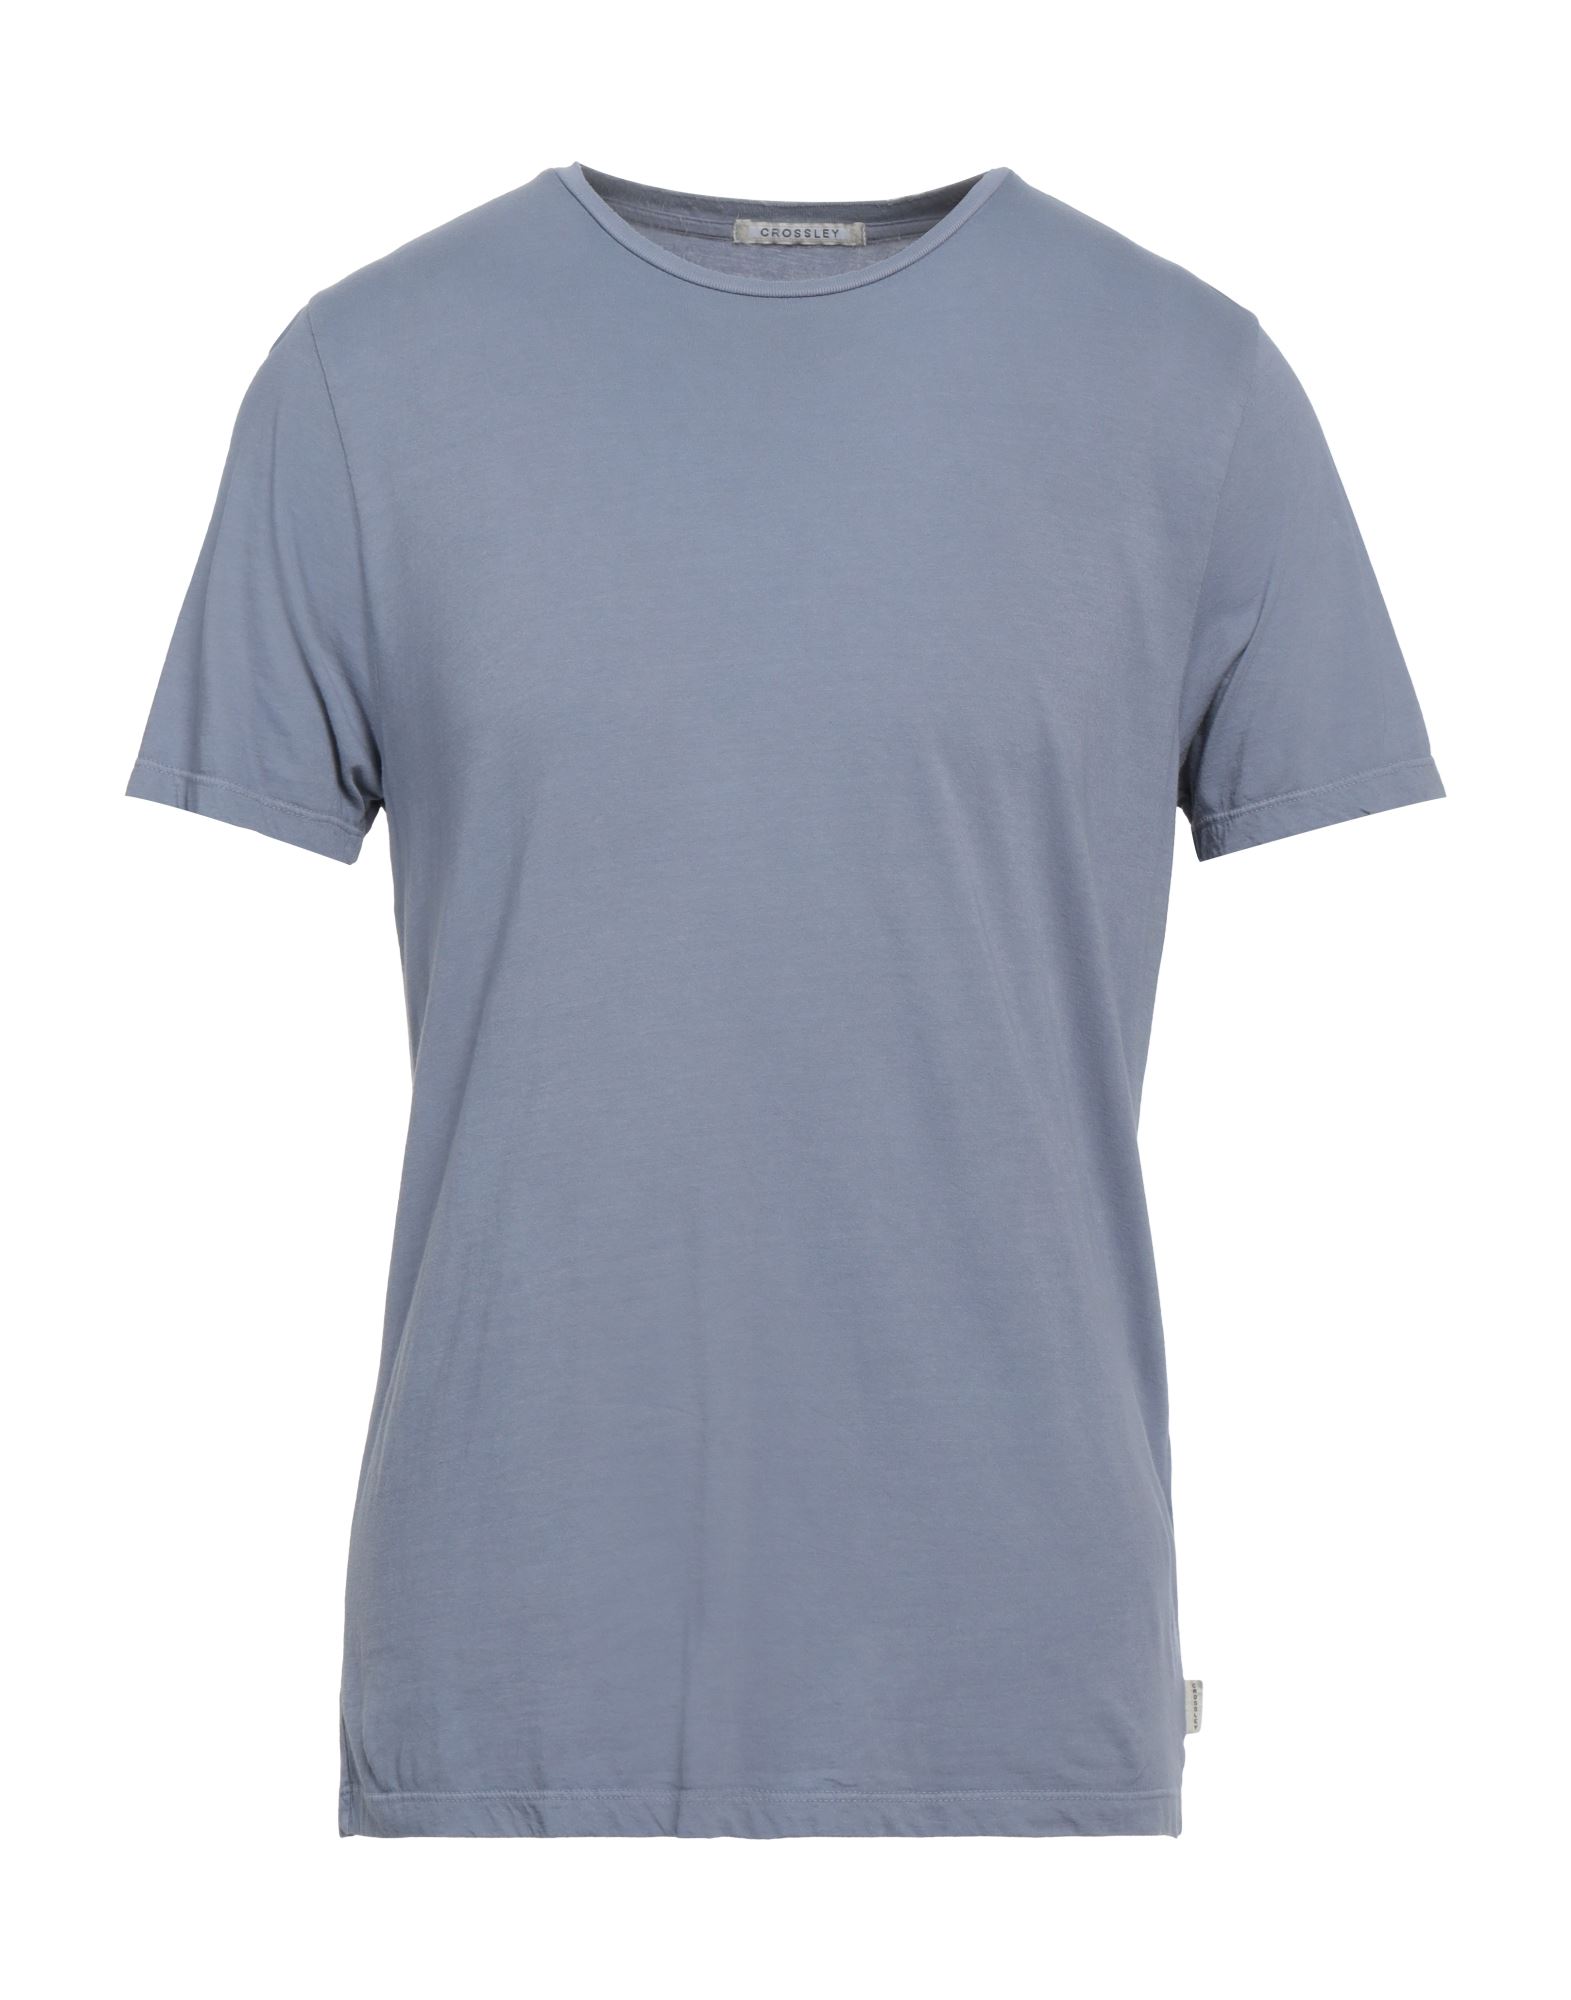 CROSSLEY T-shirts Herren Blaugrau von CROSSLEY